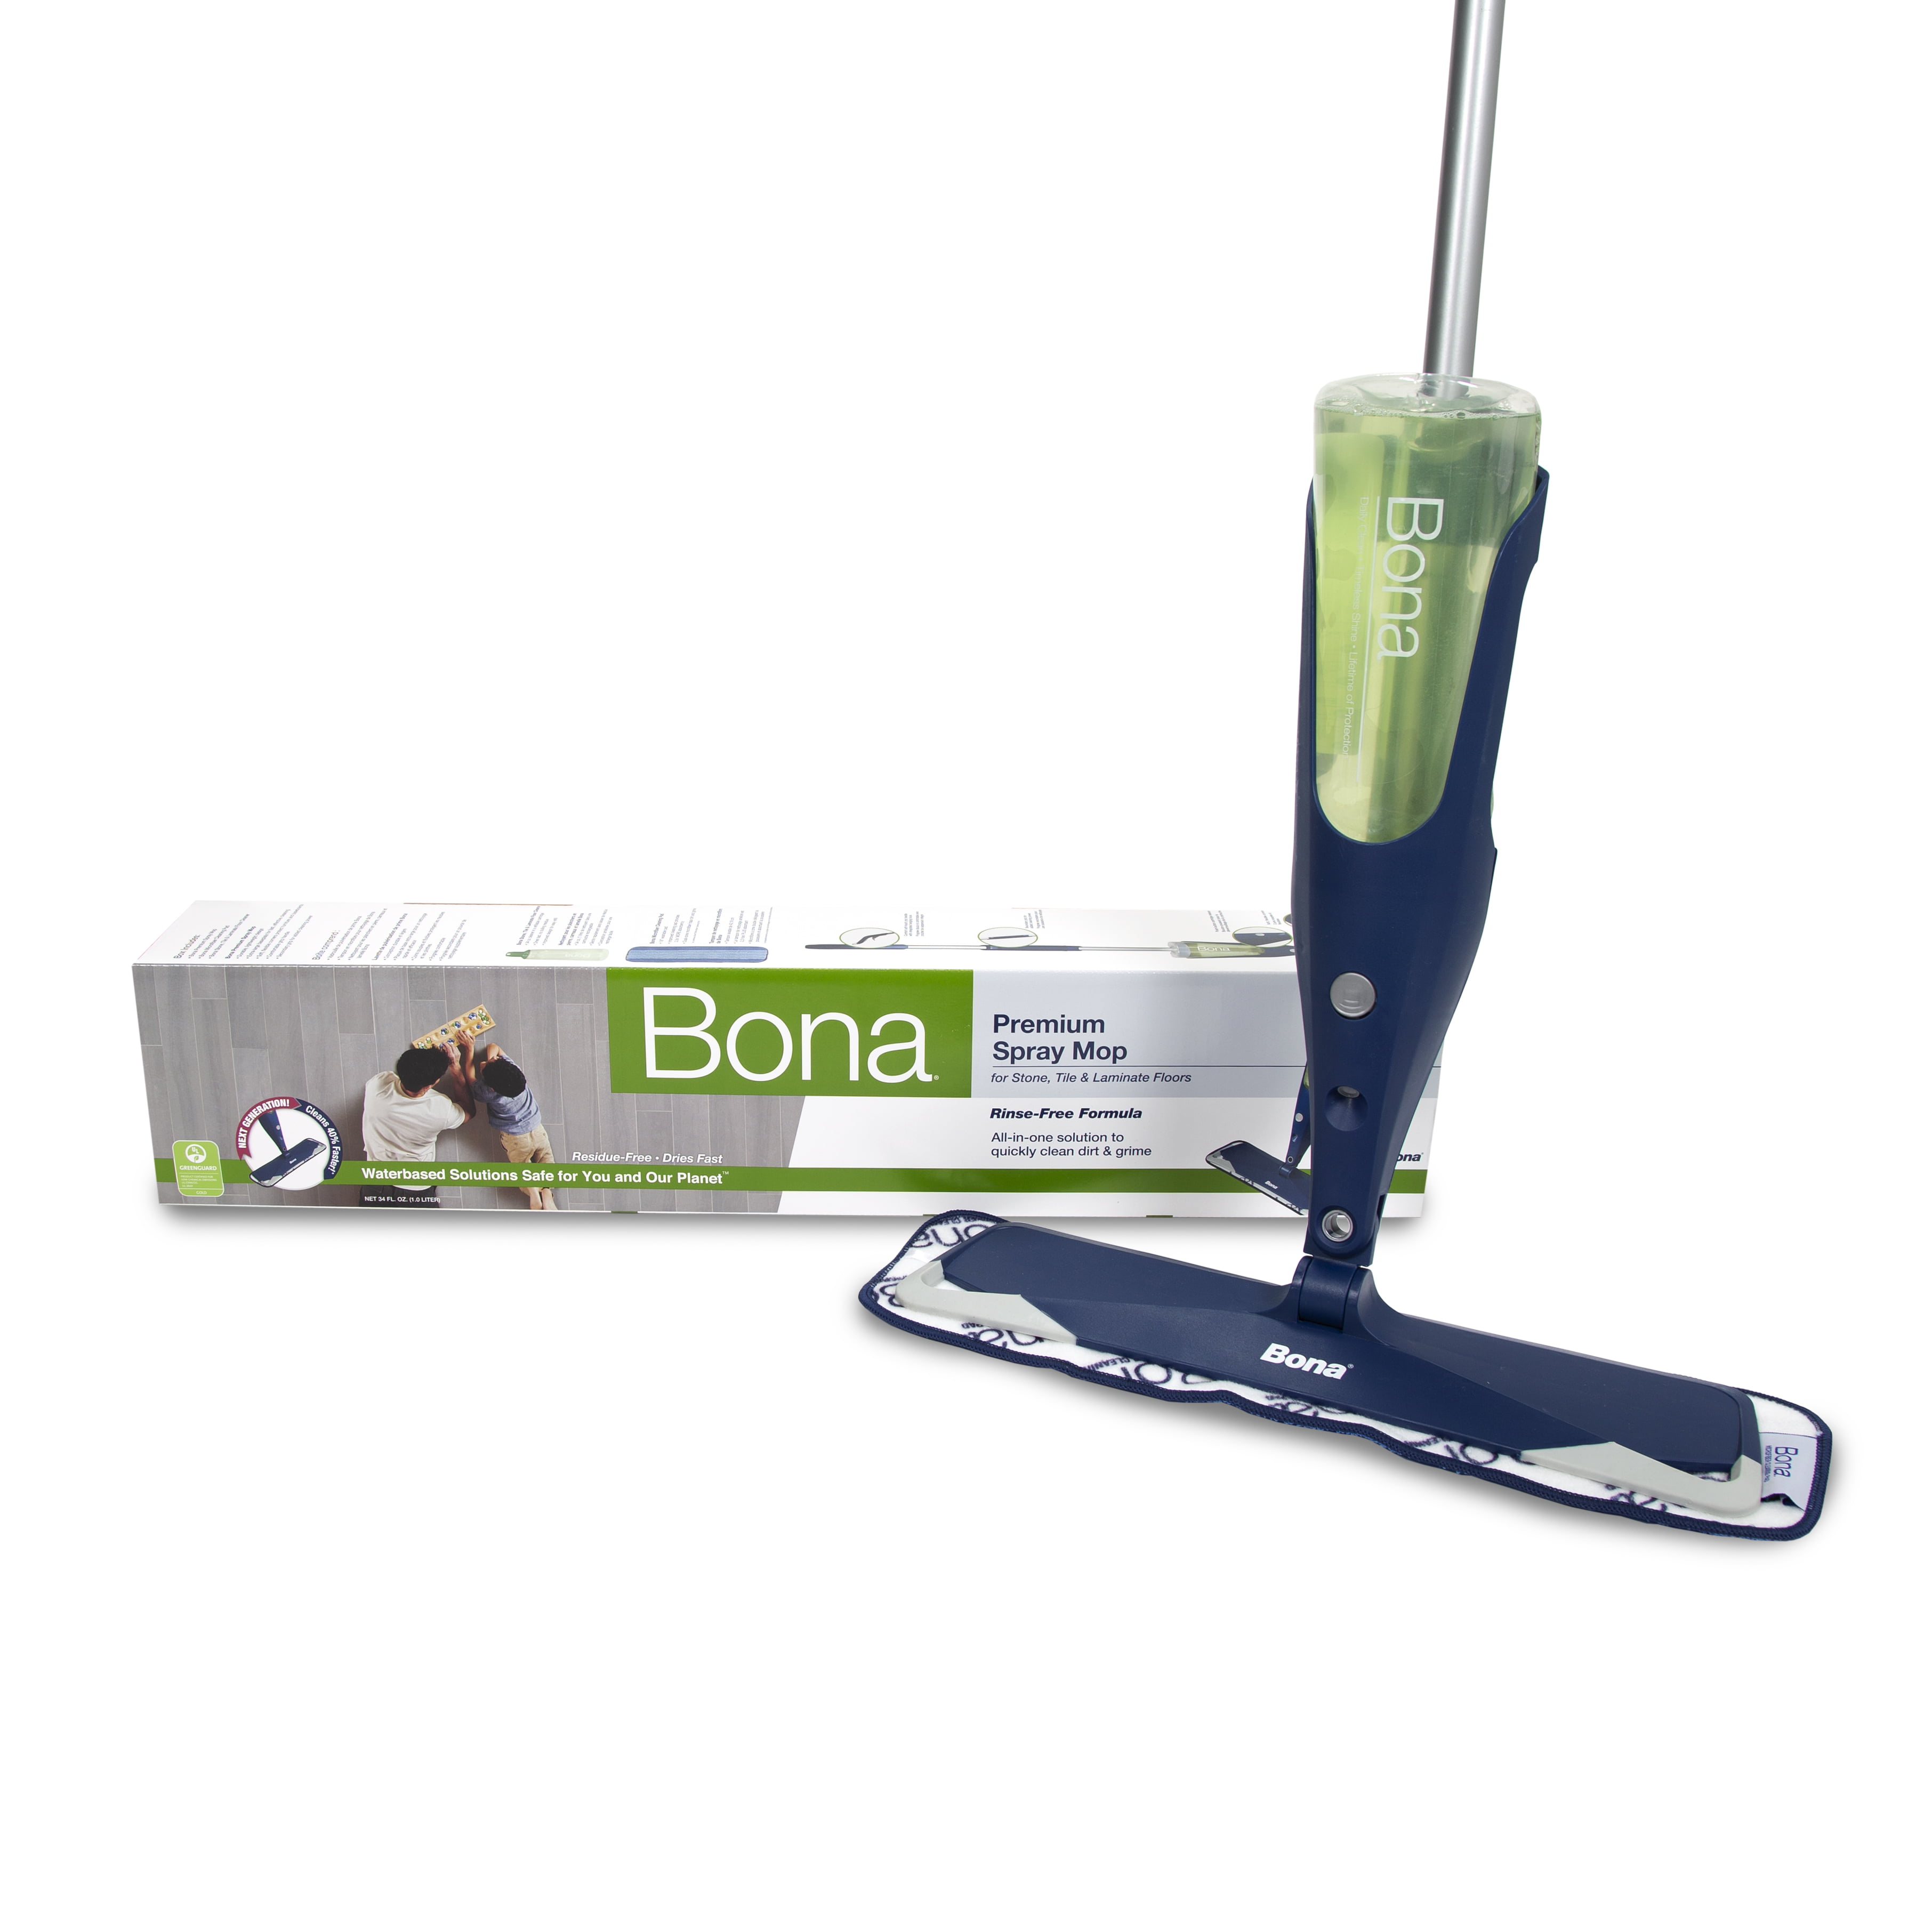 Bona® Premium Spray Mop for Hard